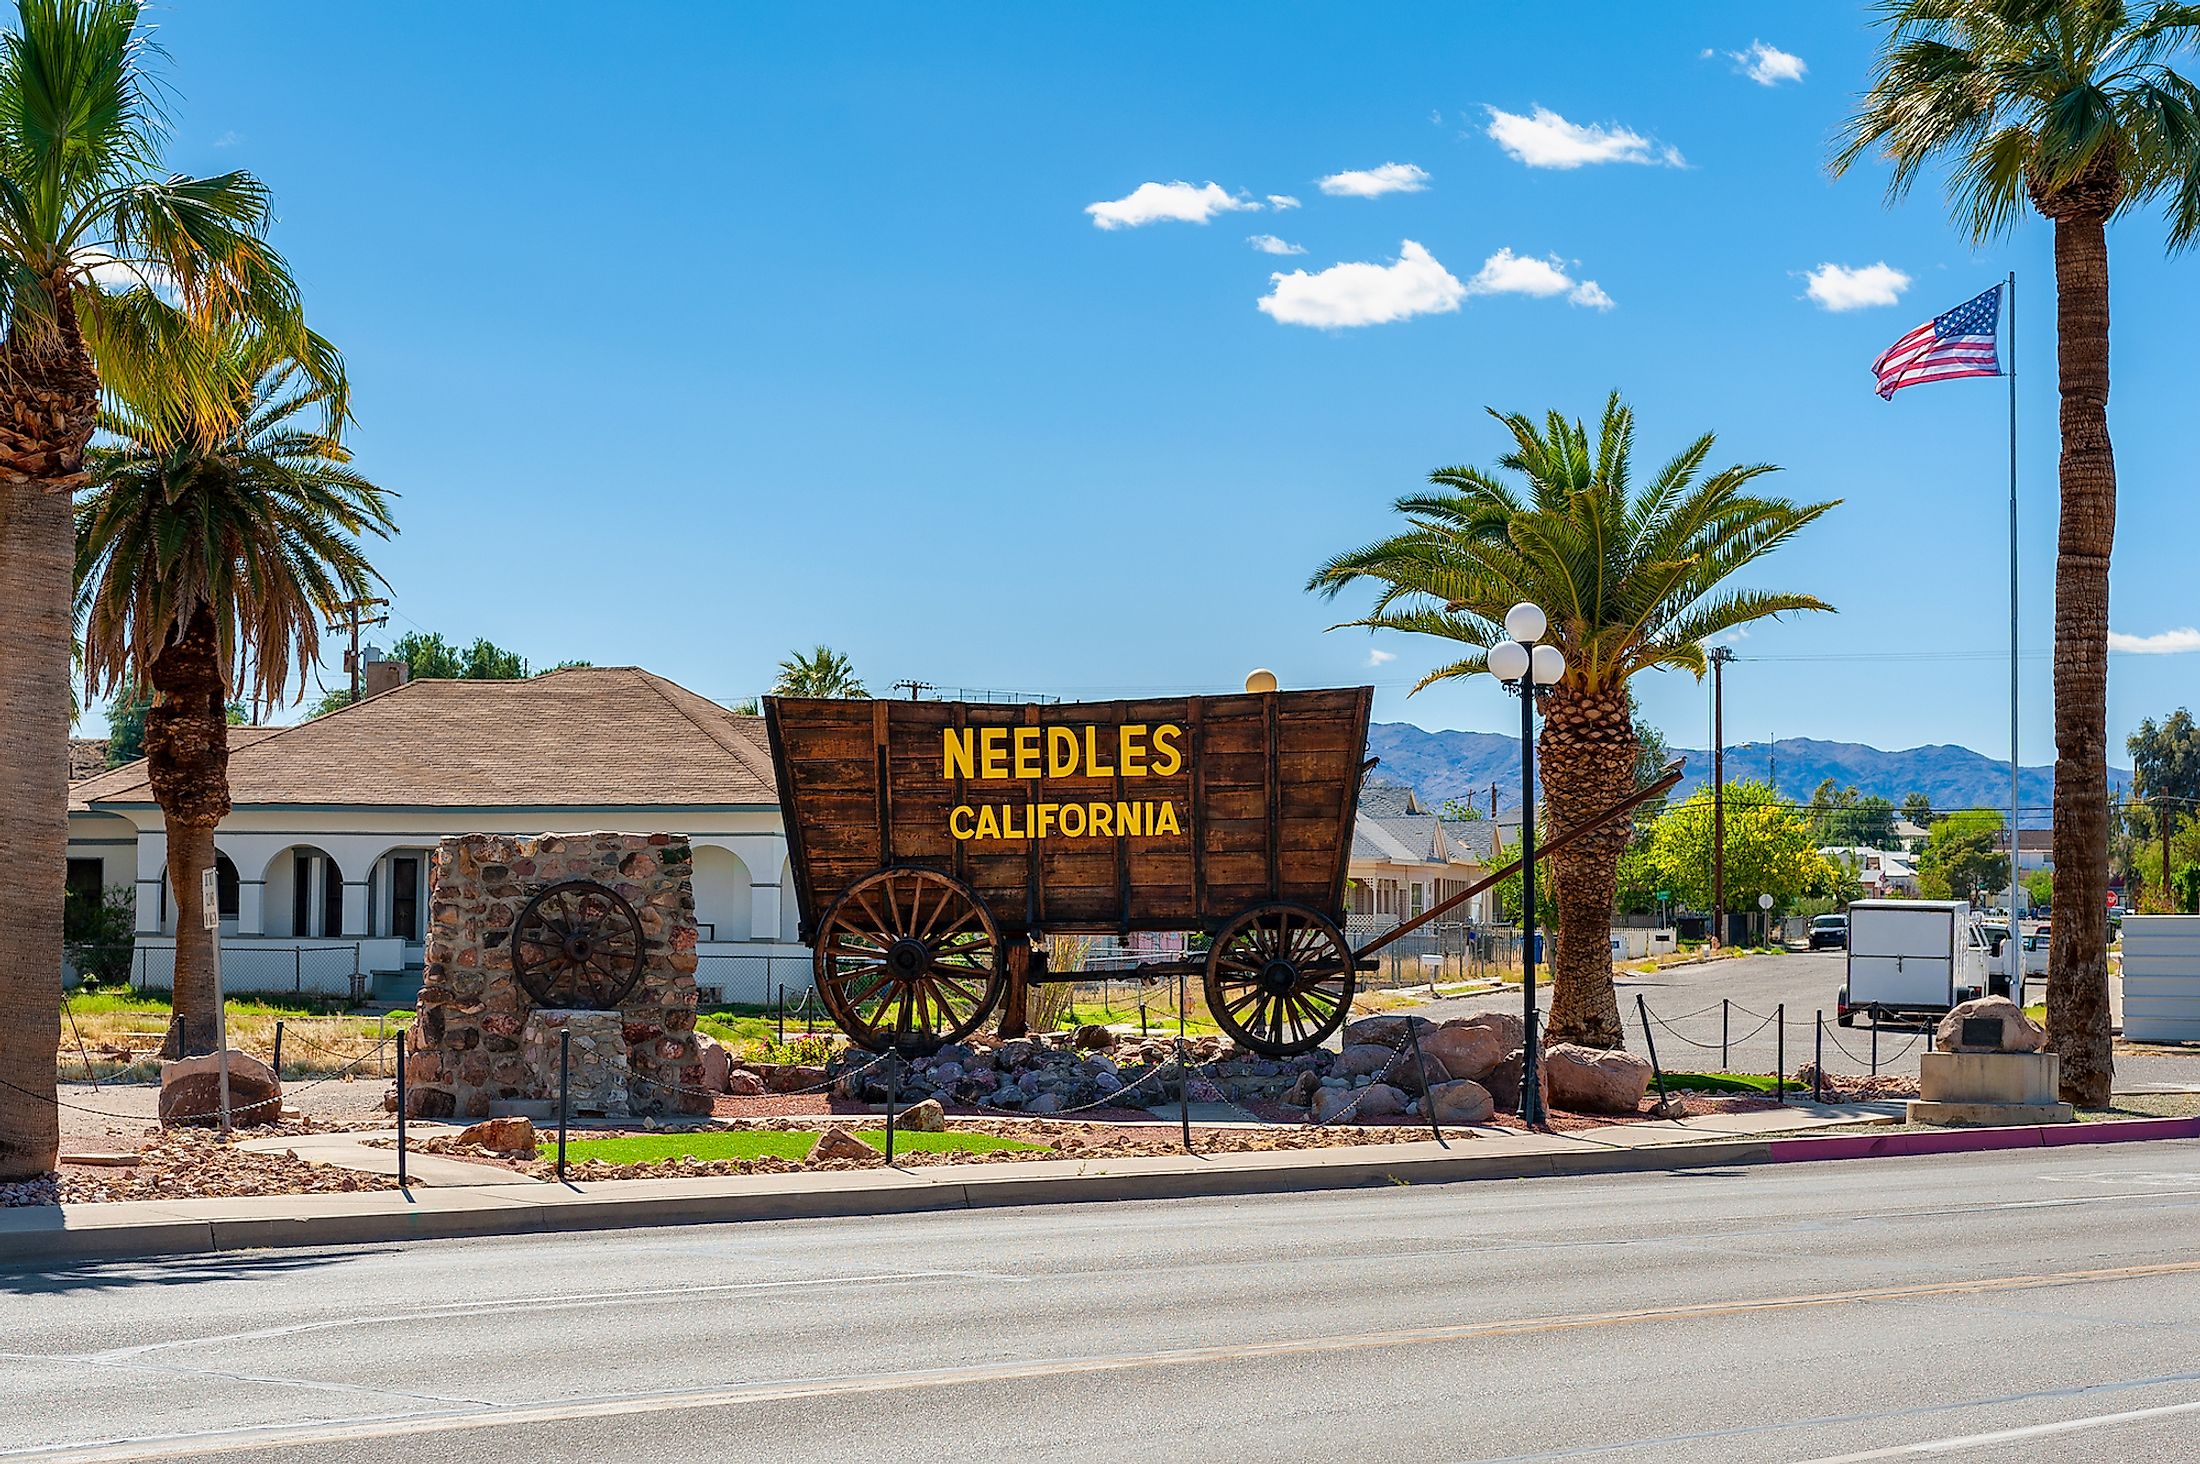 Needles, California. Editorial credit: Allard One / Shutterstock.com